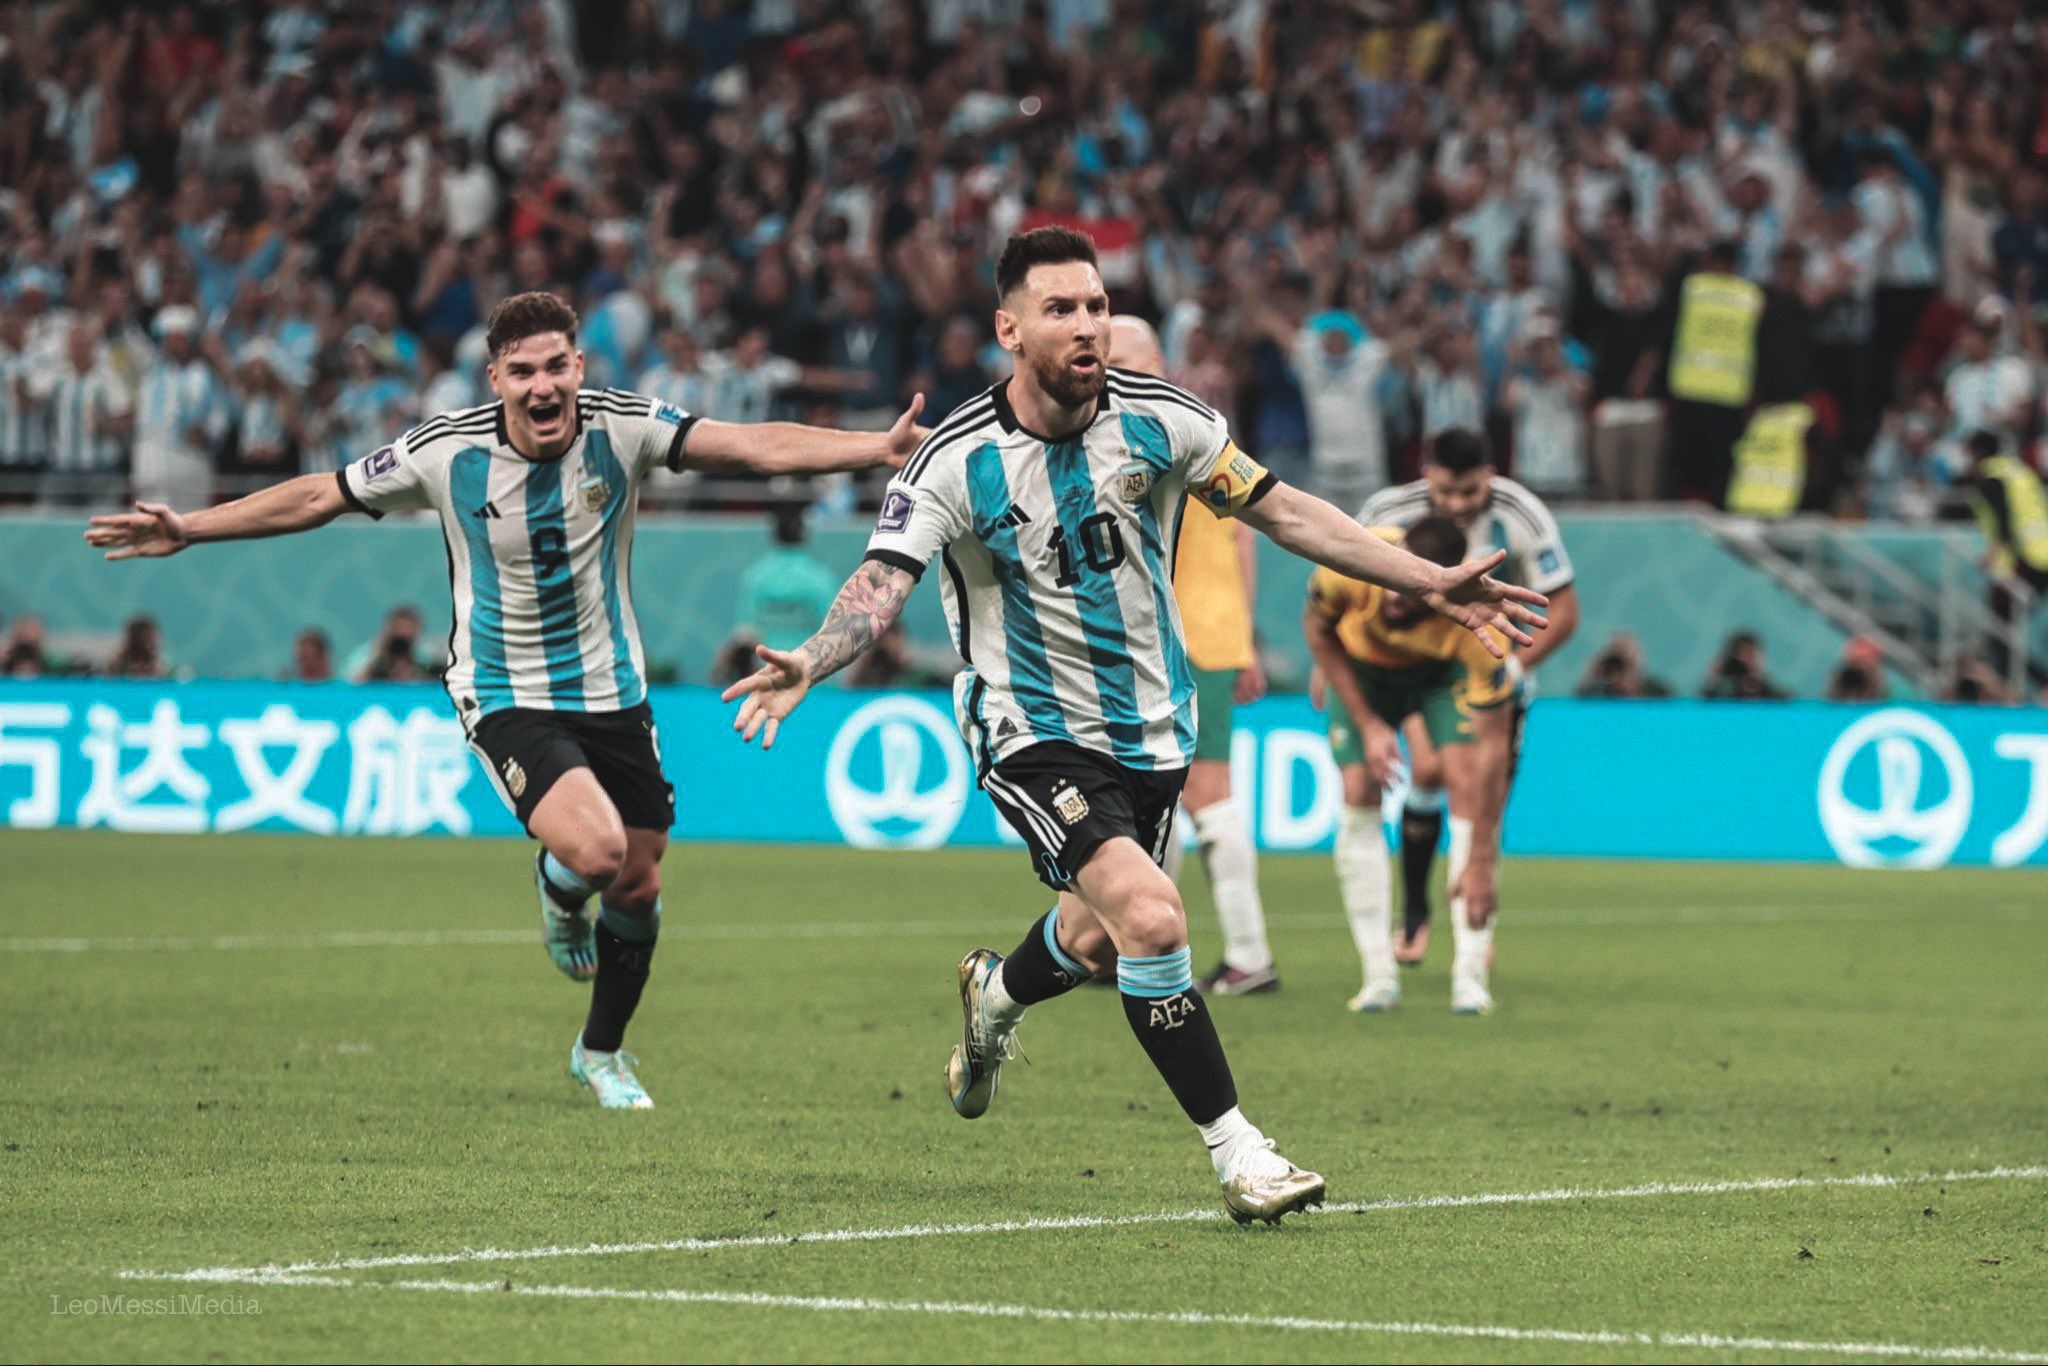 Lionel Messi scores in his 1,000th match to overtake Cristiano Ronaldo, Maradona’s World Cup tally